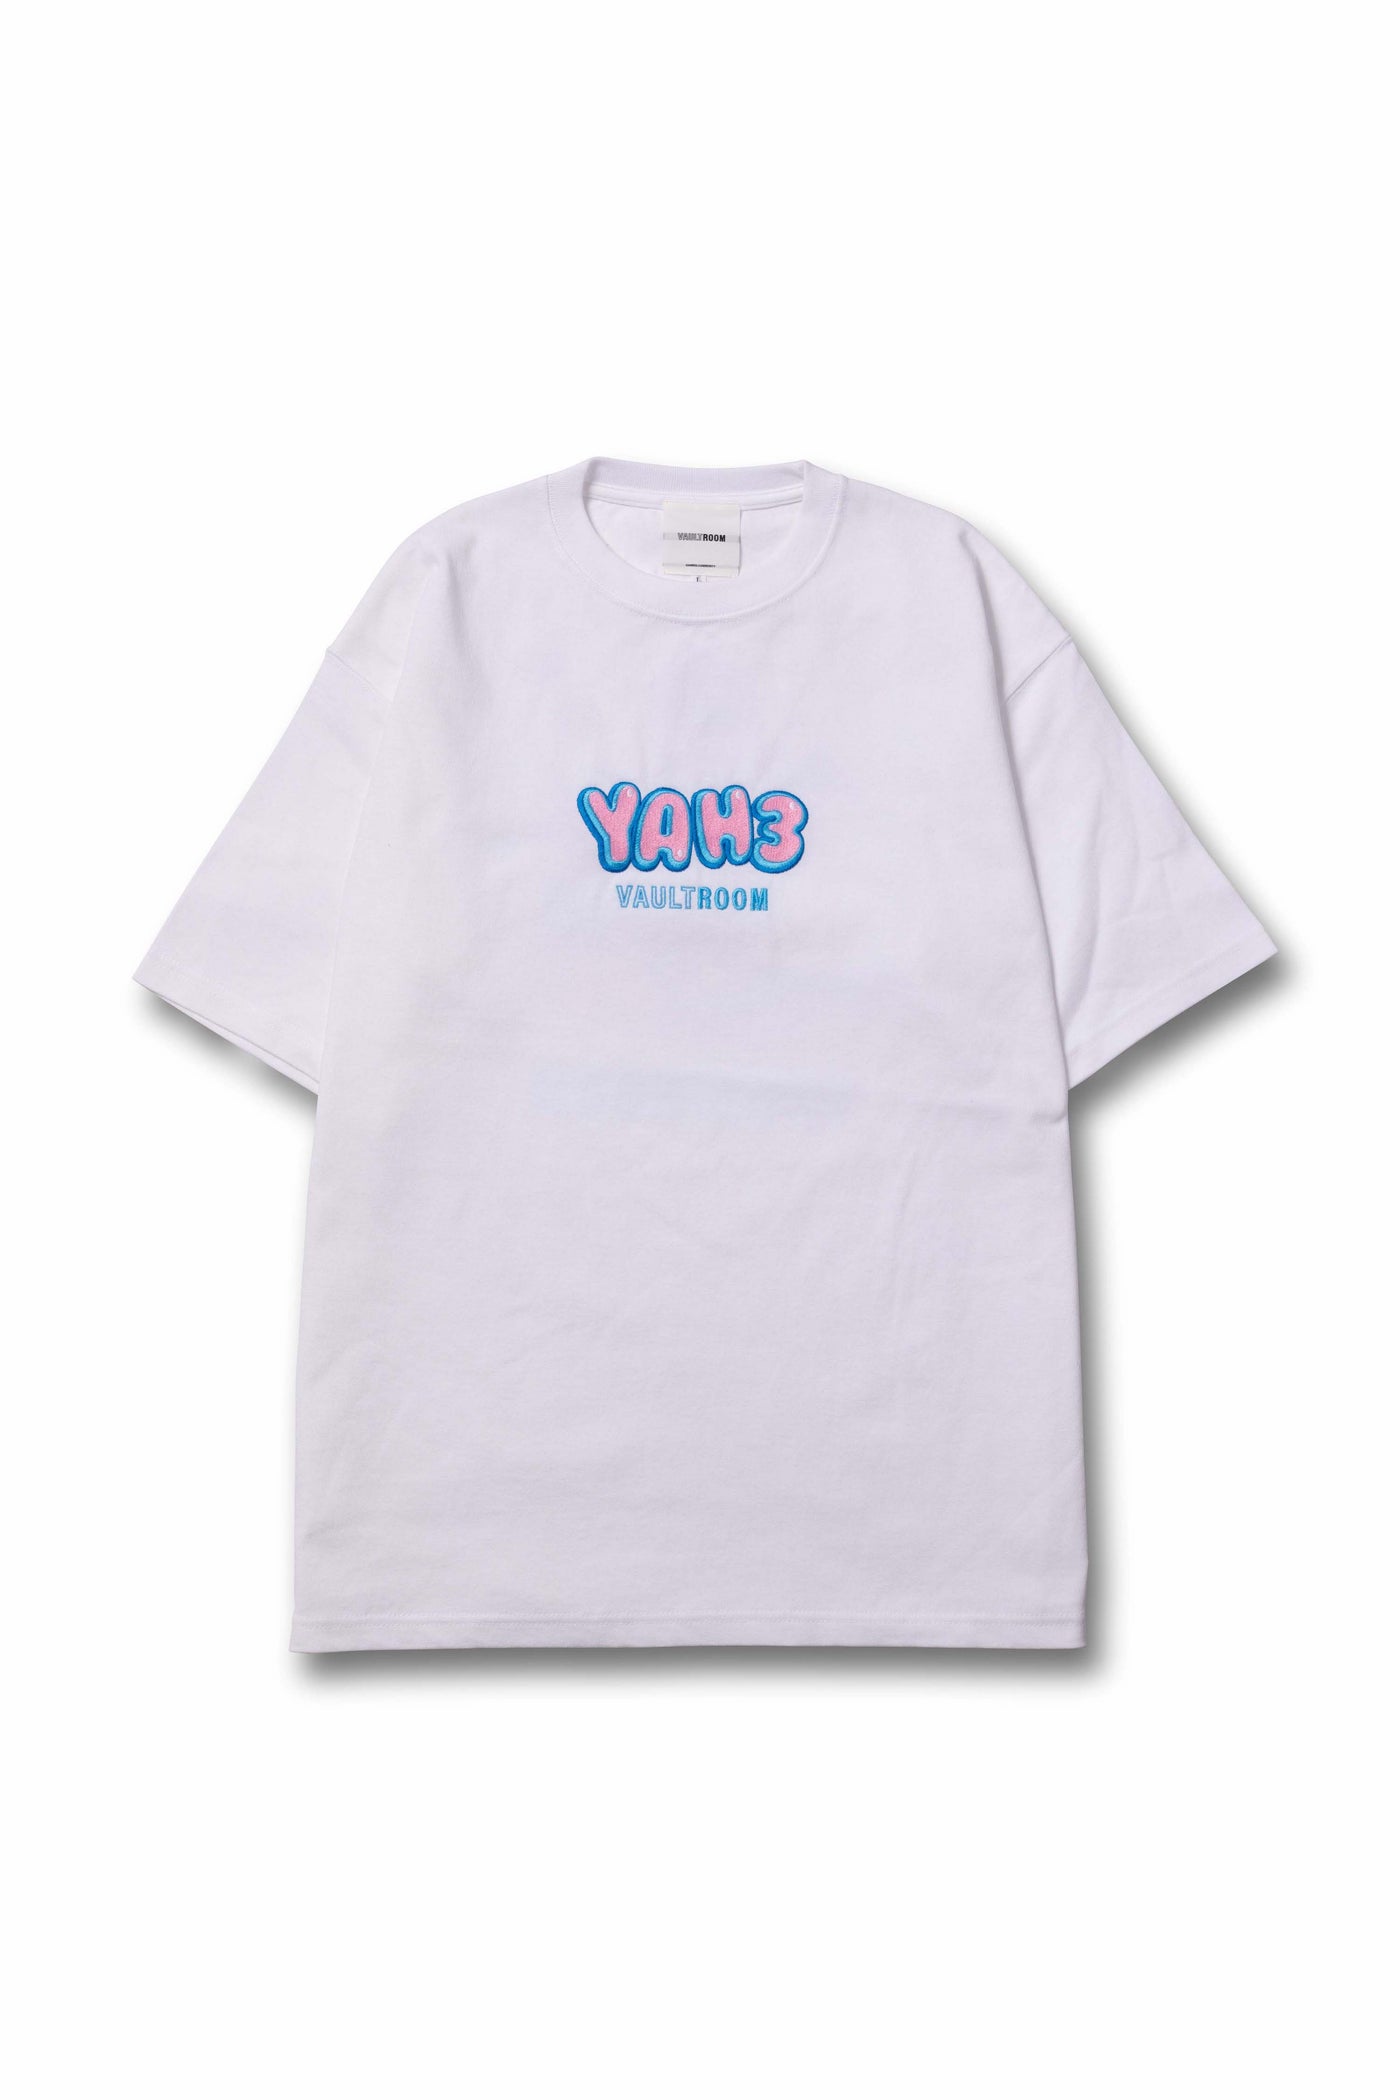 vaultroom YAH3 TEE / WHT XL ボルトルーム Tシャツボルトルーム